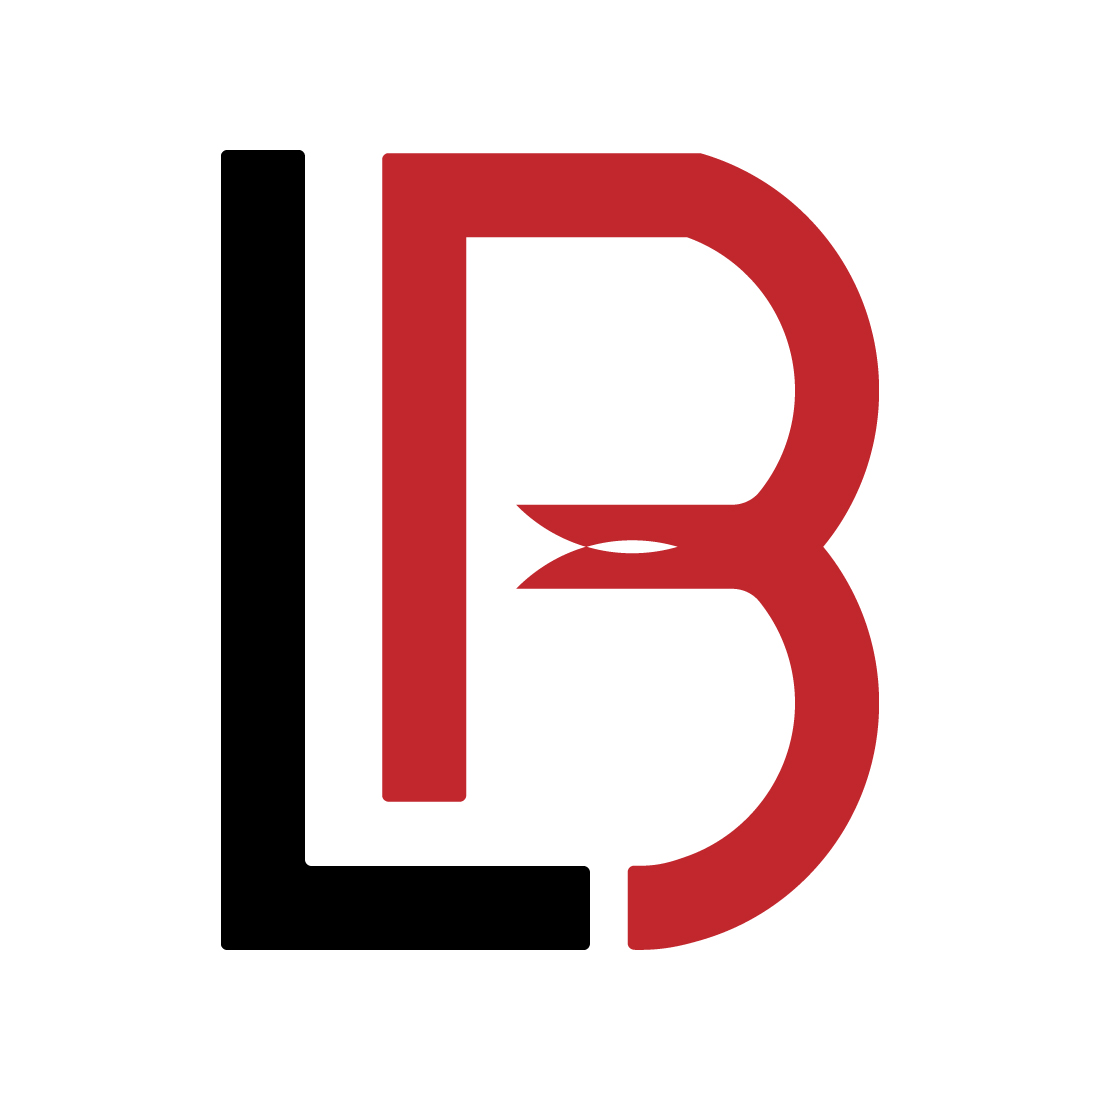 Initials LB letters logo design vector images LB logo design red and black color icon BL logo design best identity preview image.